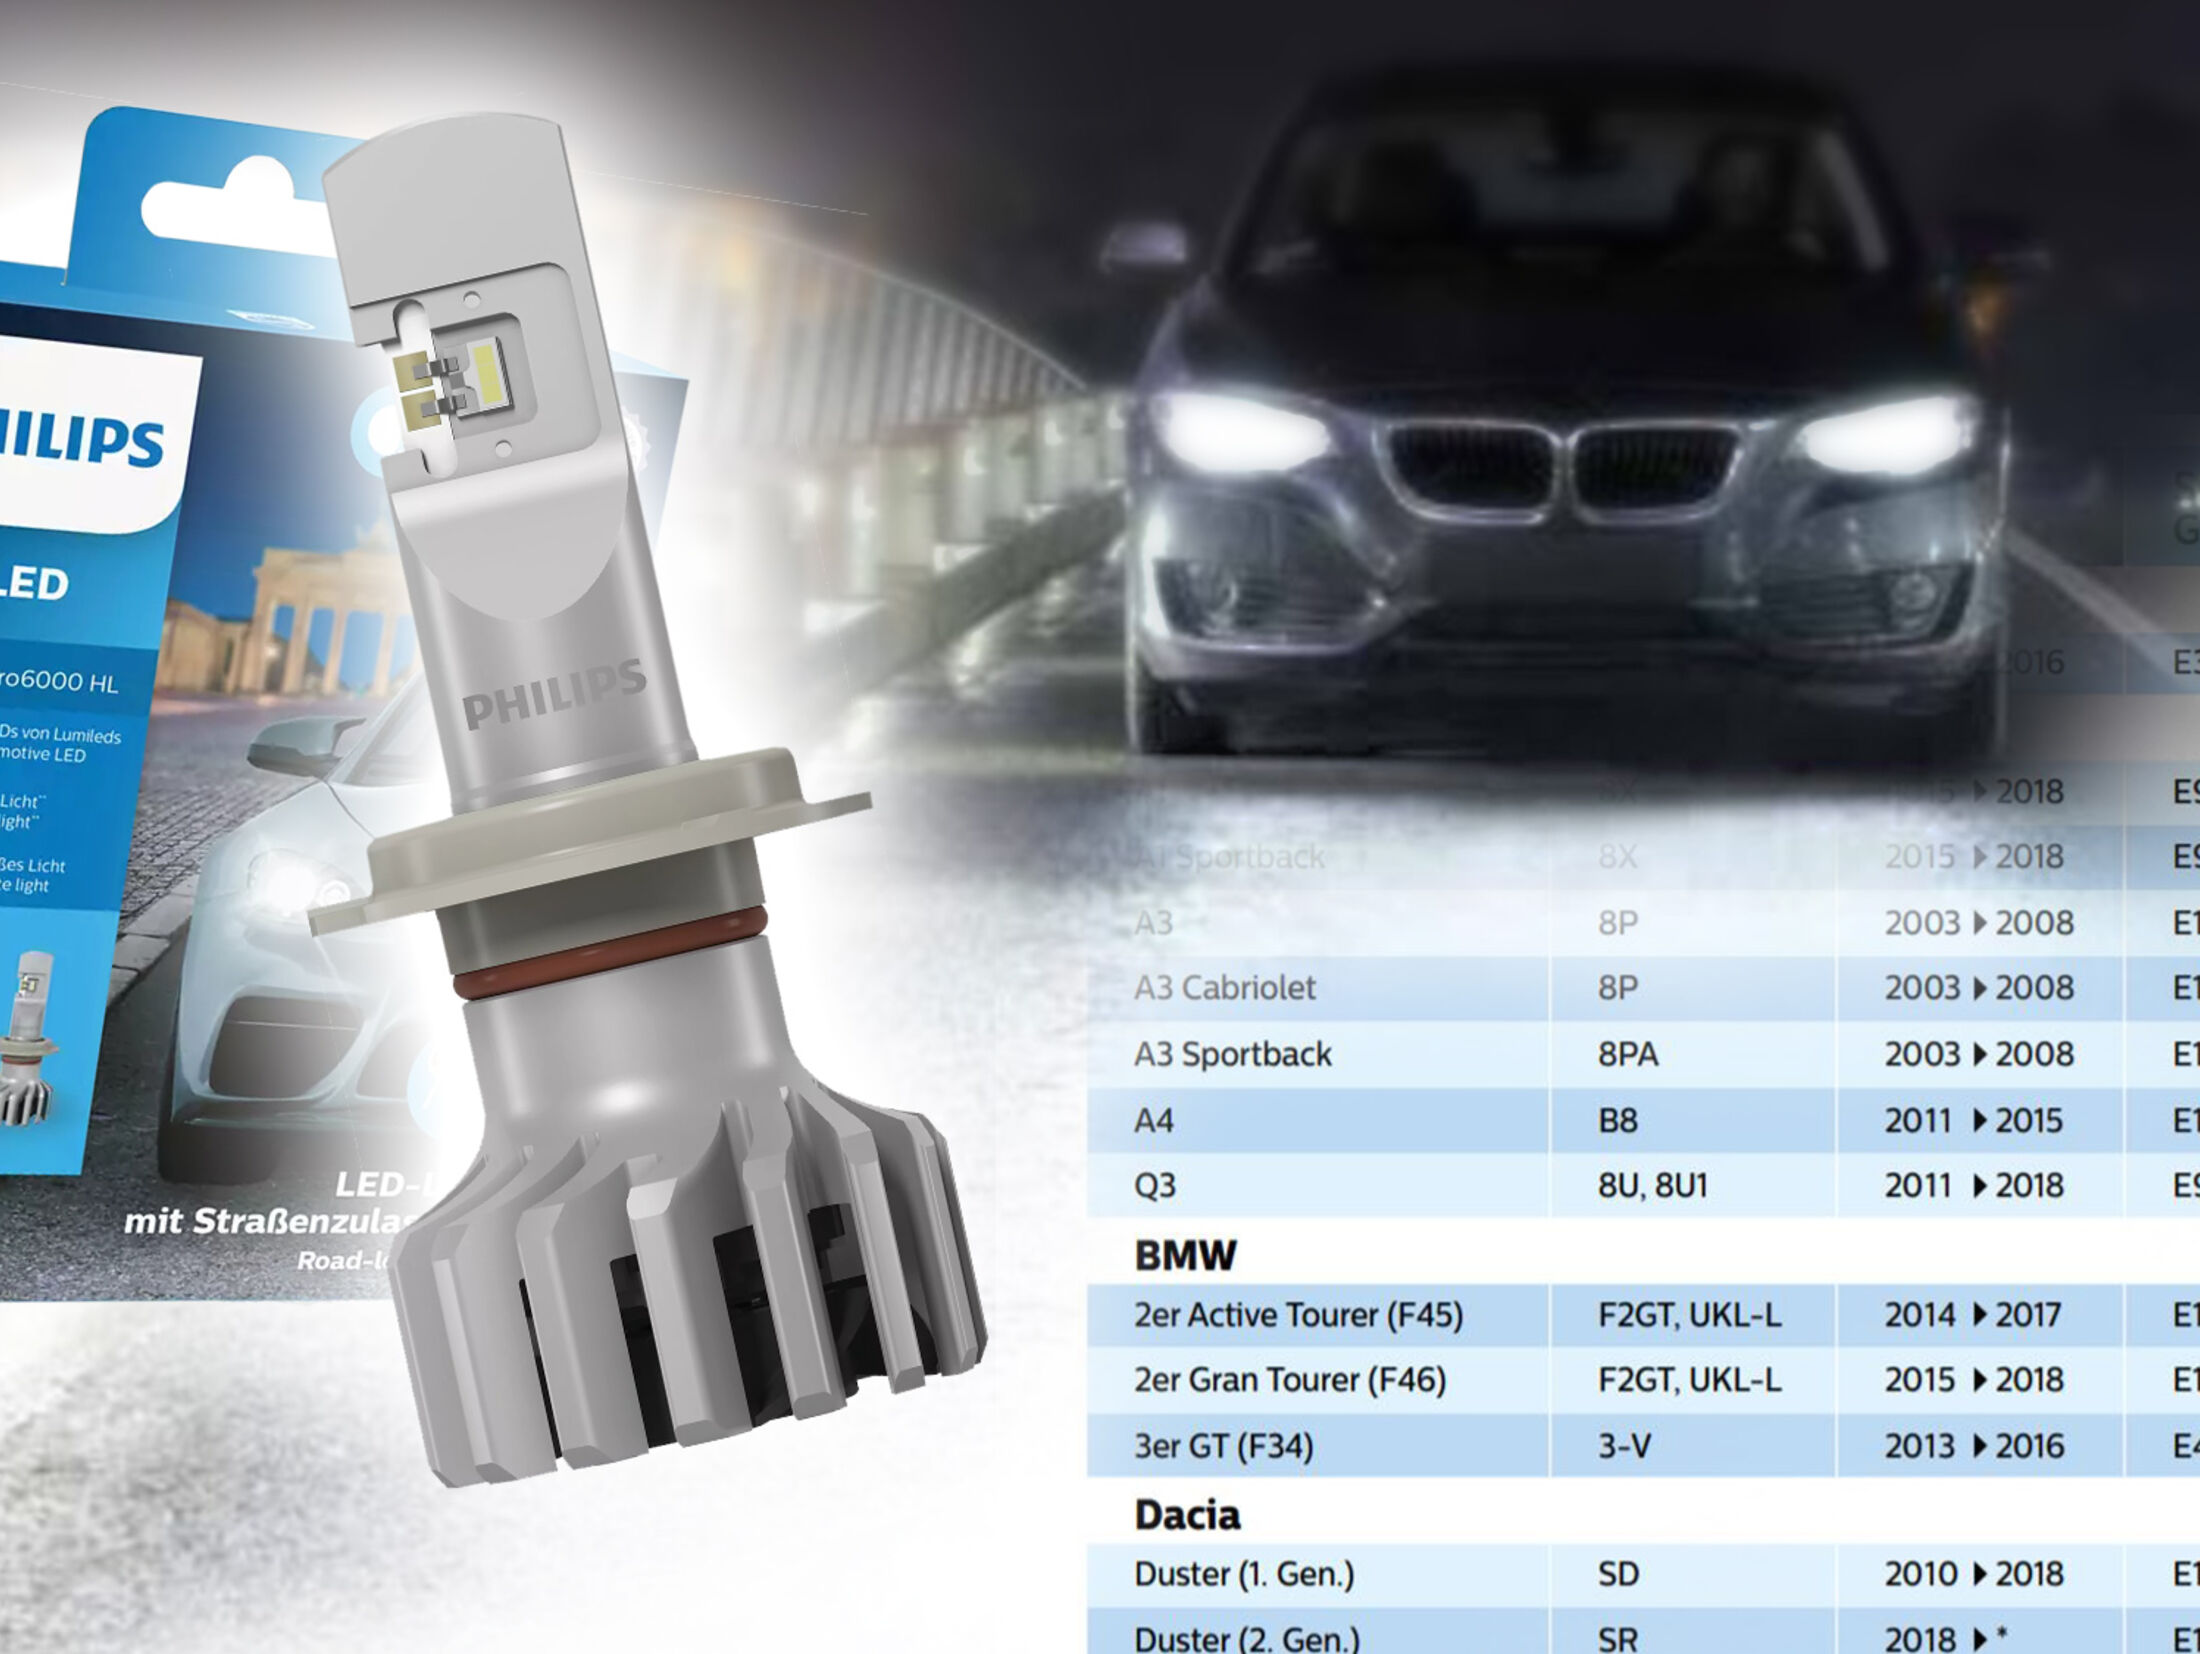 https://imgr1.auto-motor-und-sport.de/Philips-Ultinon-Pro6000-LED-H7-Birne-Leuchtmittel-Licht-jsonLd4x3-4032d8a5-1798098.jpg